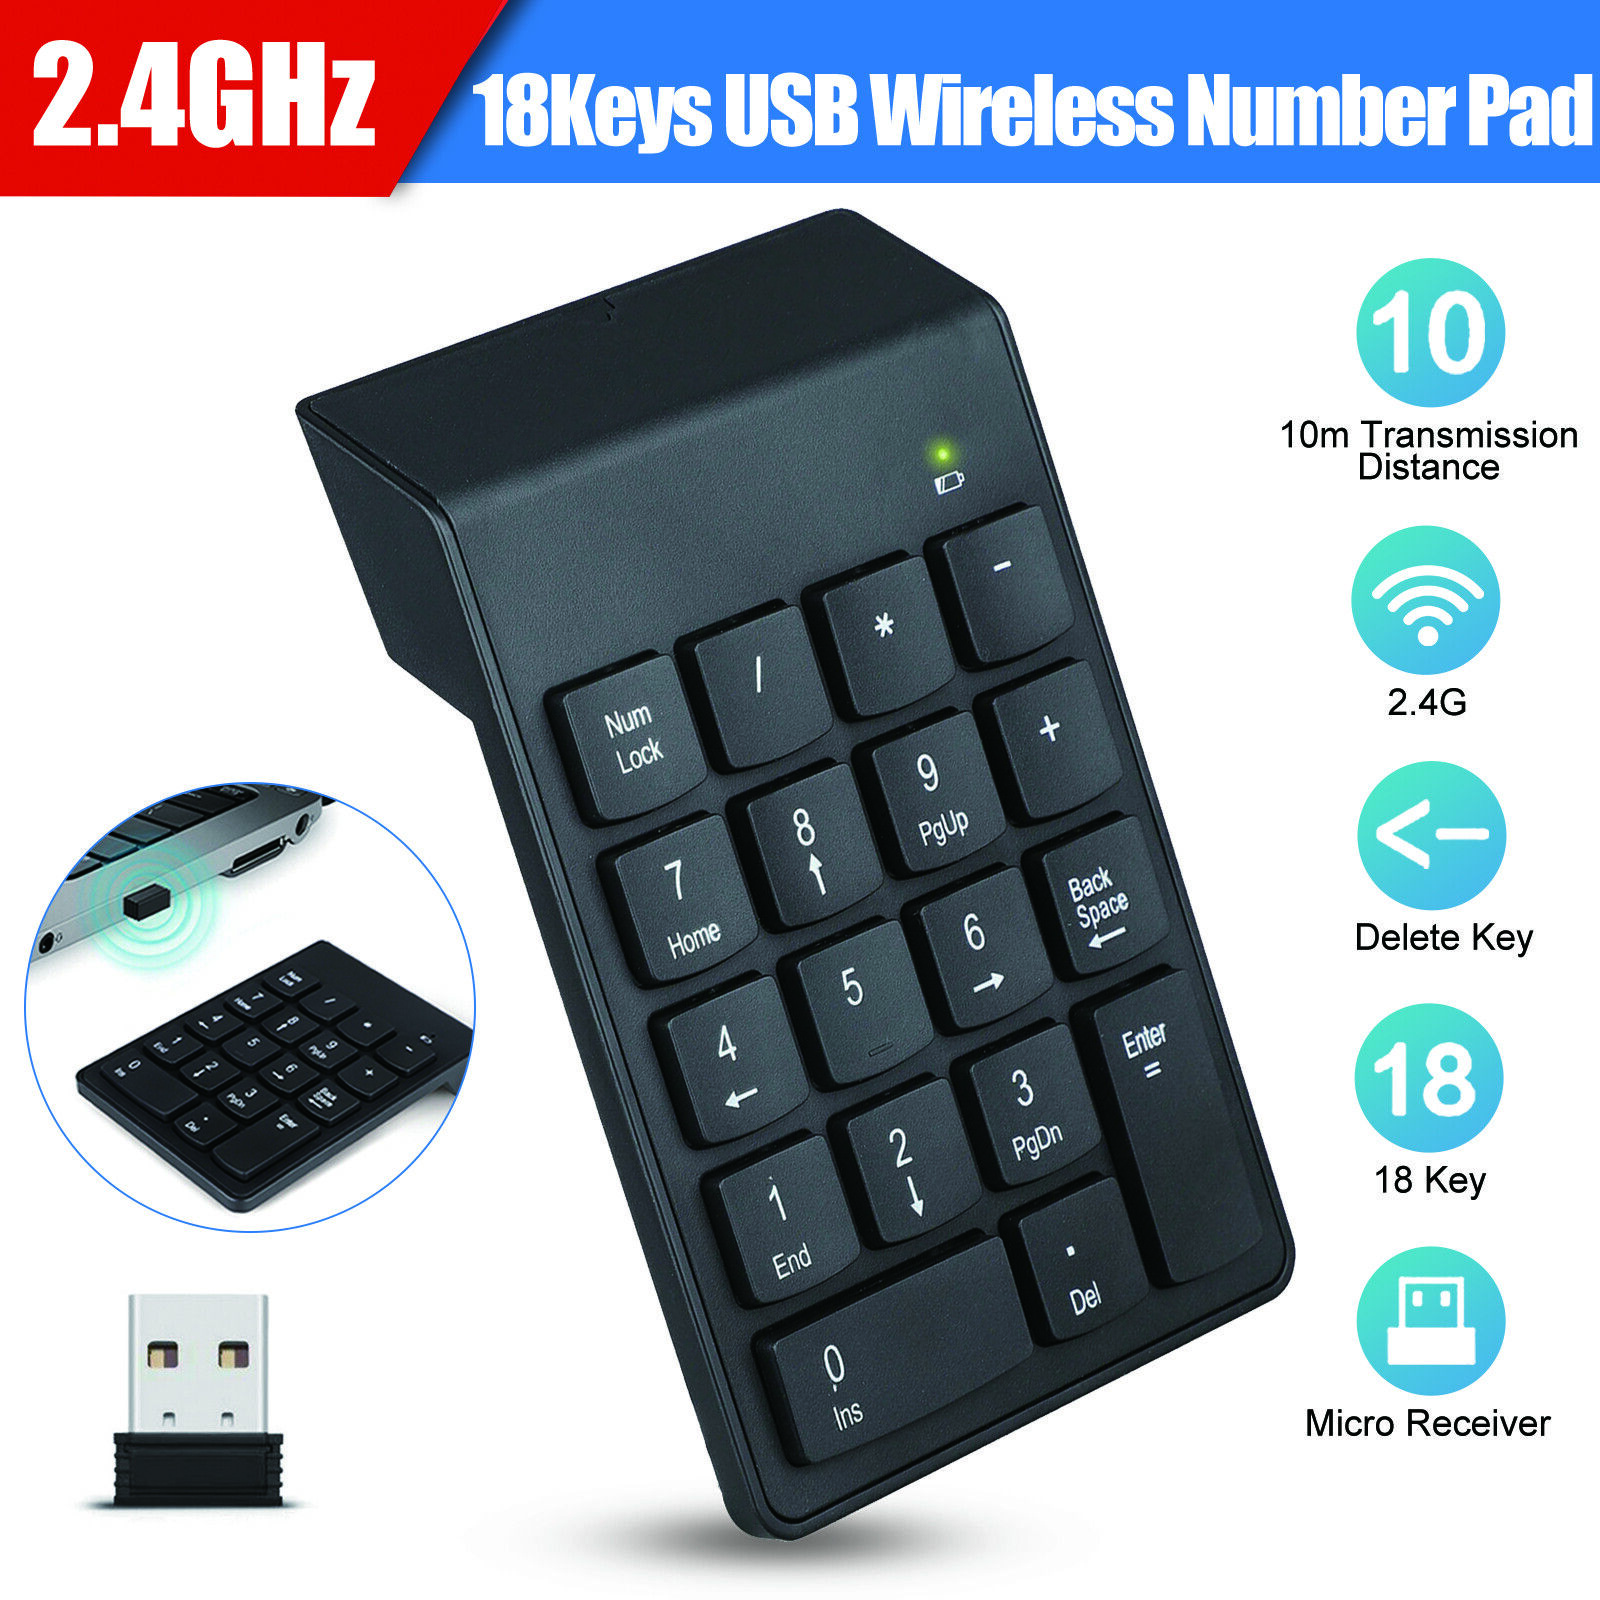 USB 2.4G Wireless Number Pad Numpad Numeric Keypad for Laptop Desktop PC 18Keys